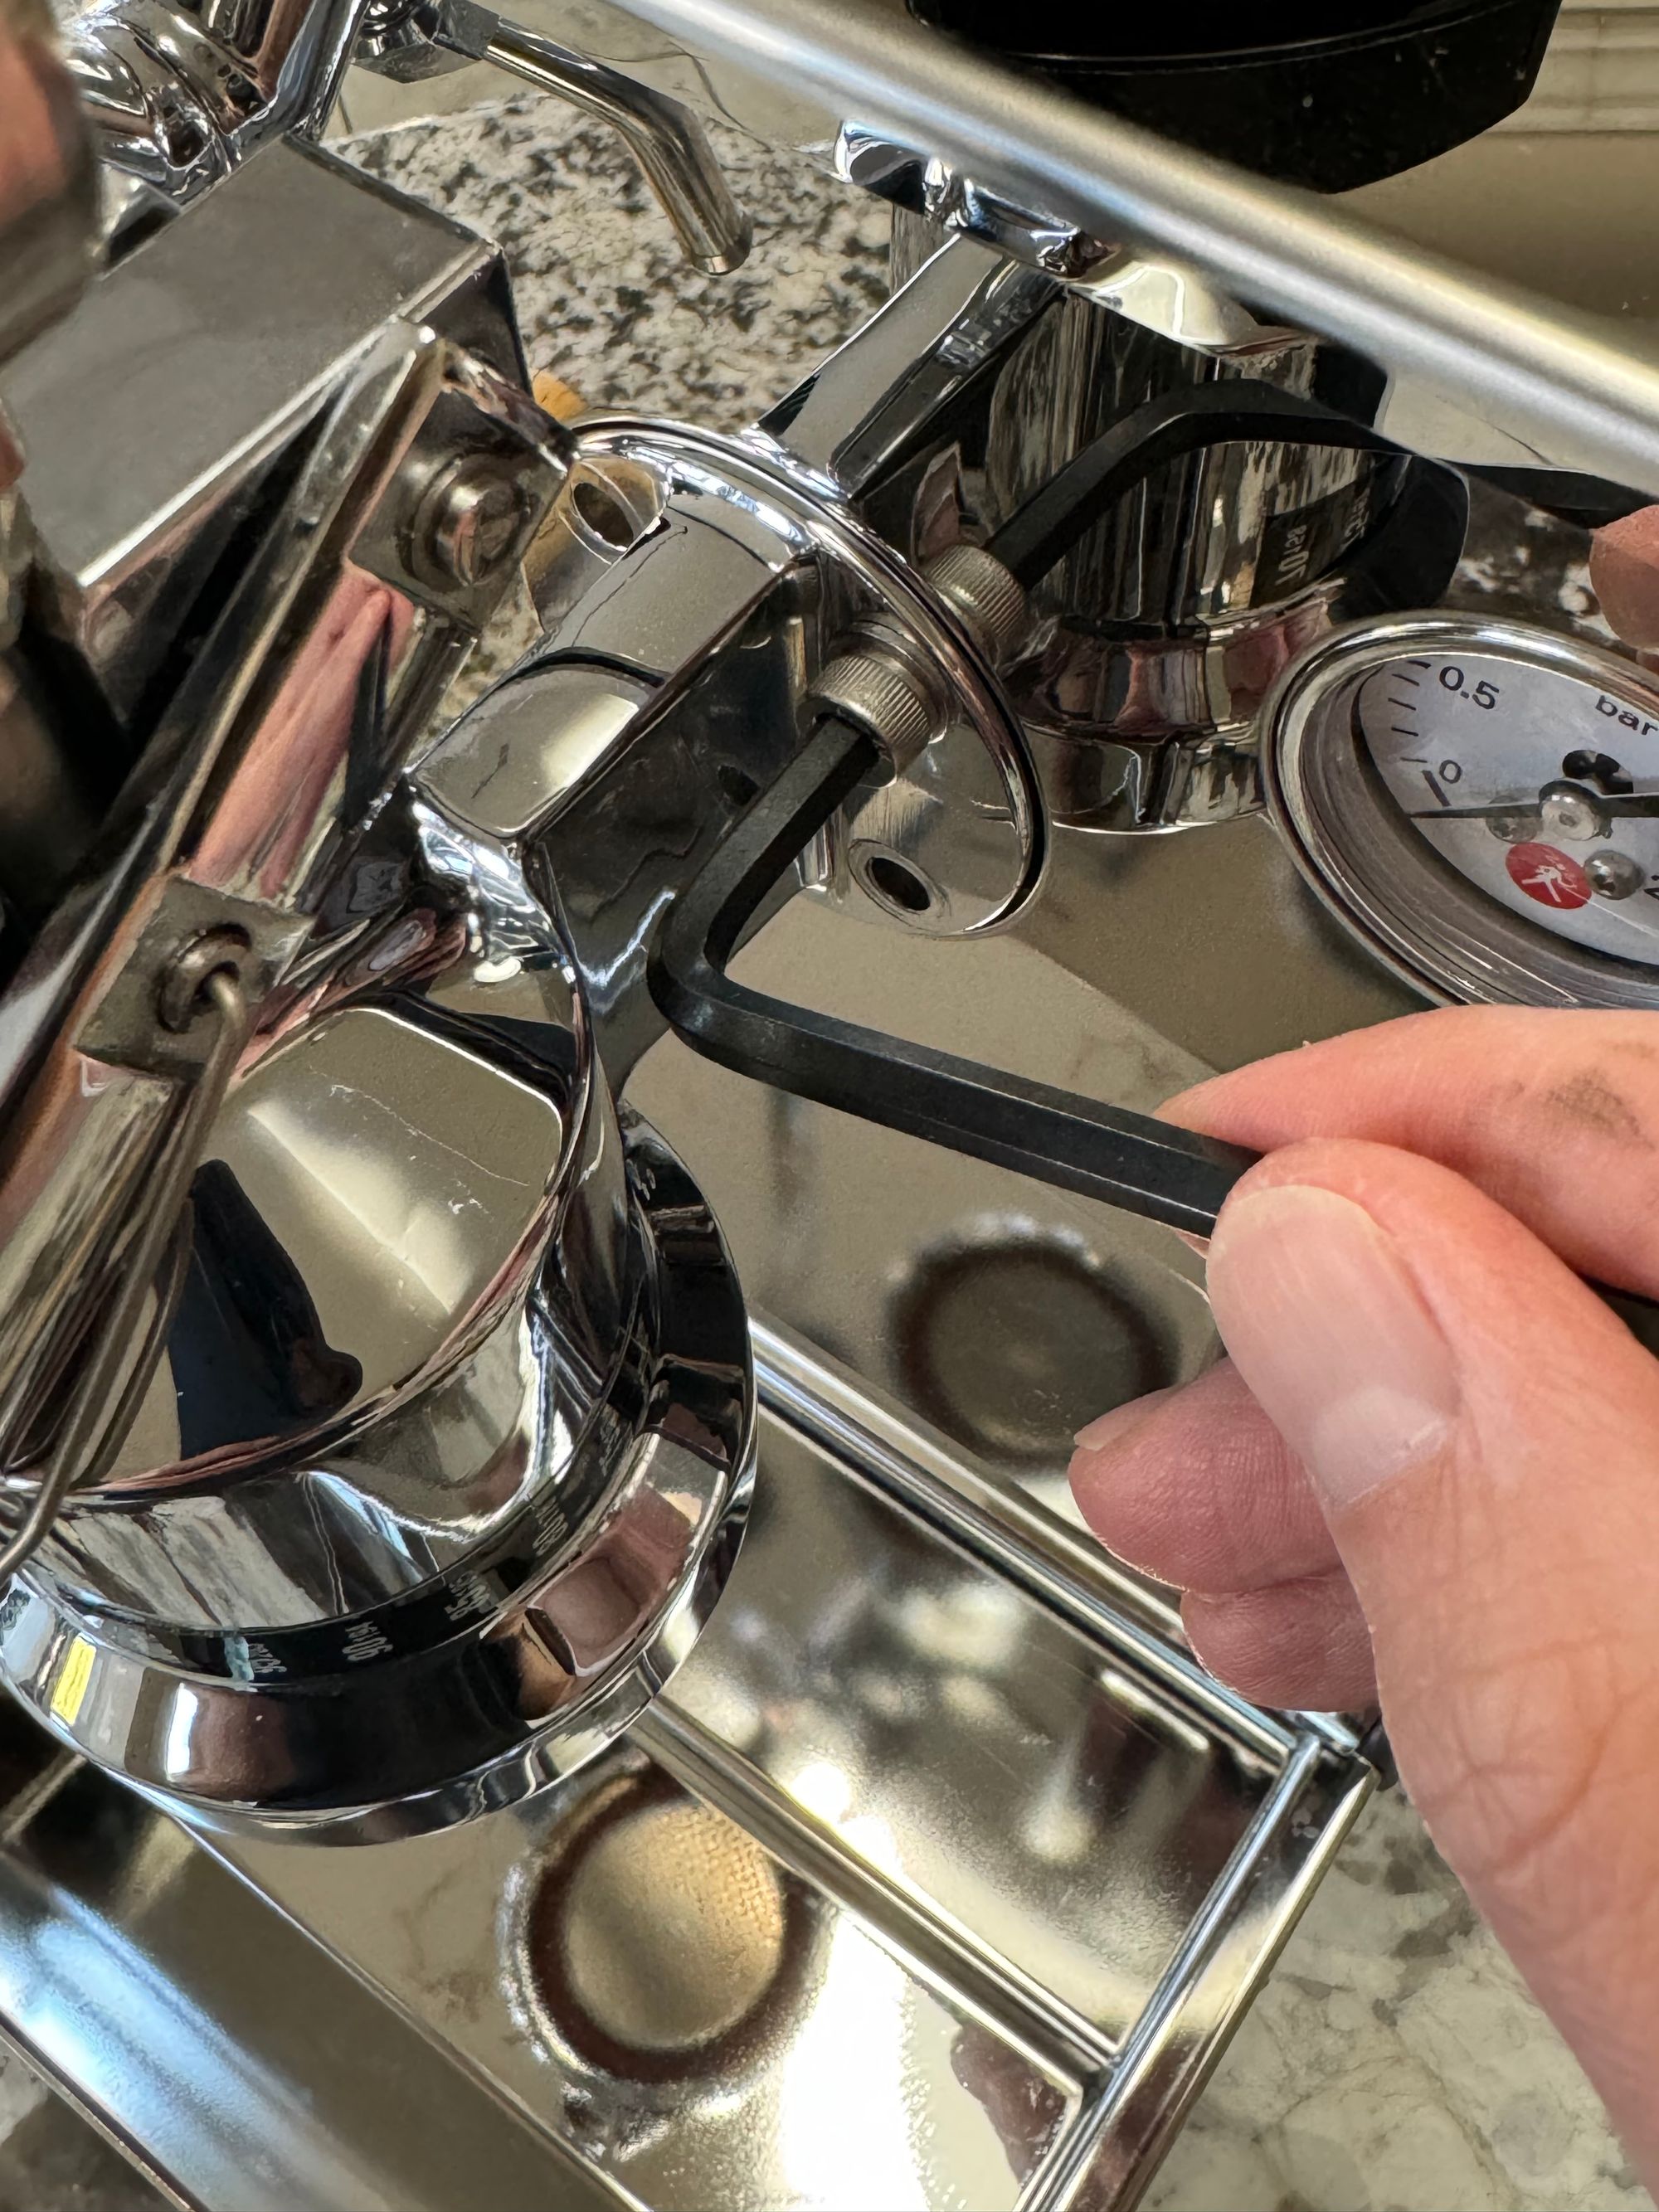 How I Clean My Olympia Cremina Espresso Machine